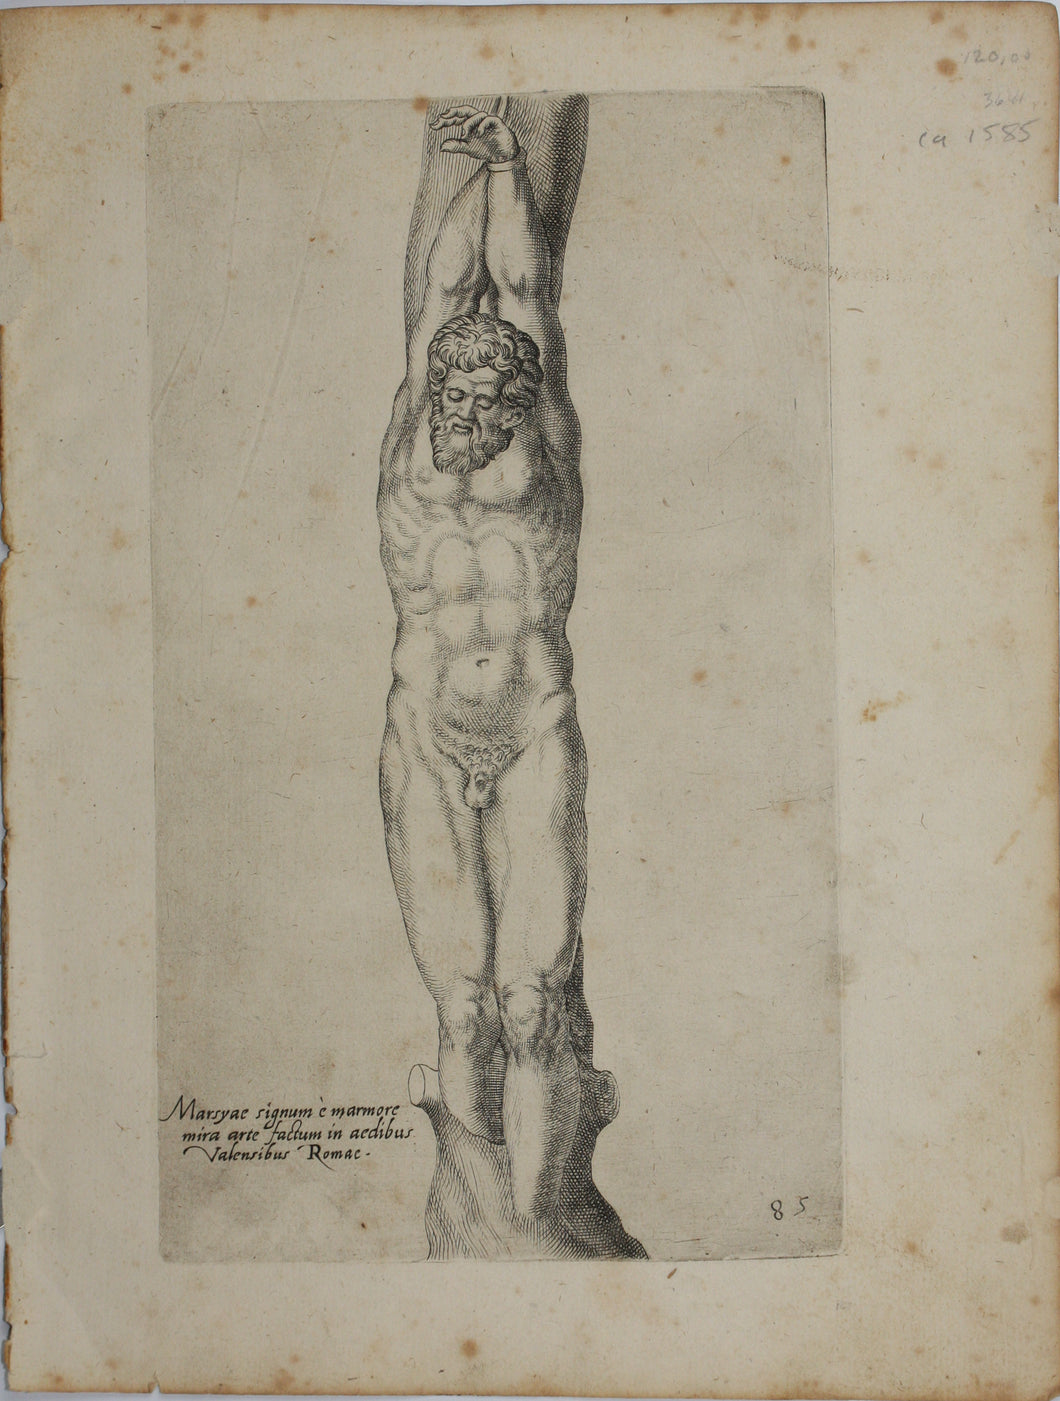 Giovanni Battista de' Cavalieri. Marsyas. Engraving. 1584 - 1585.